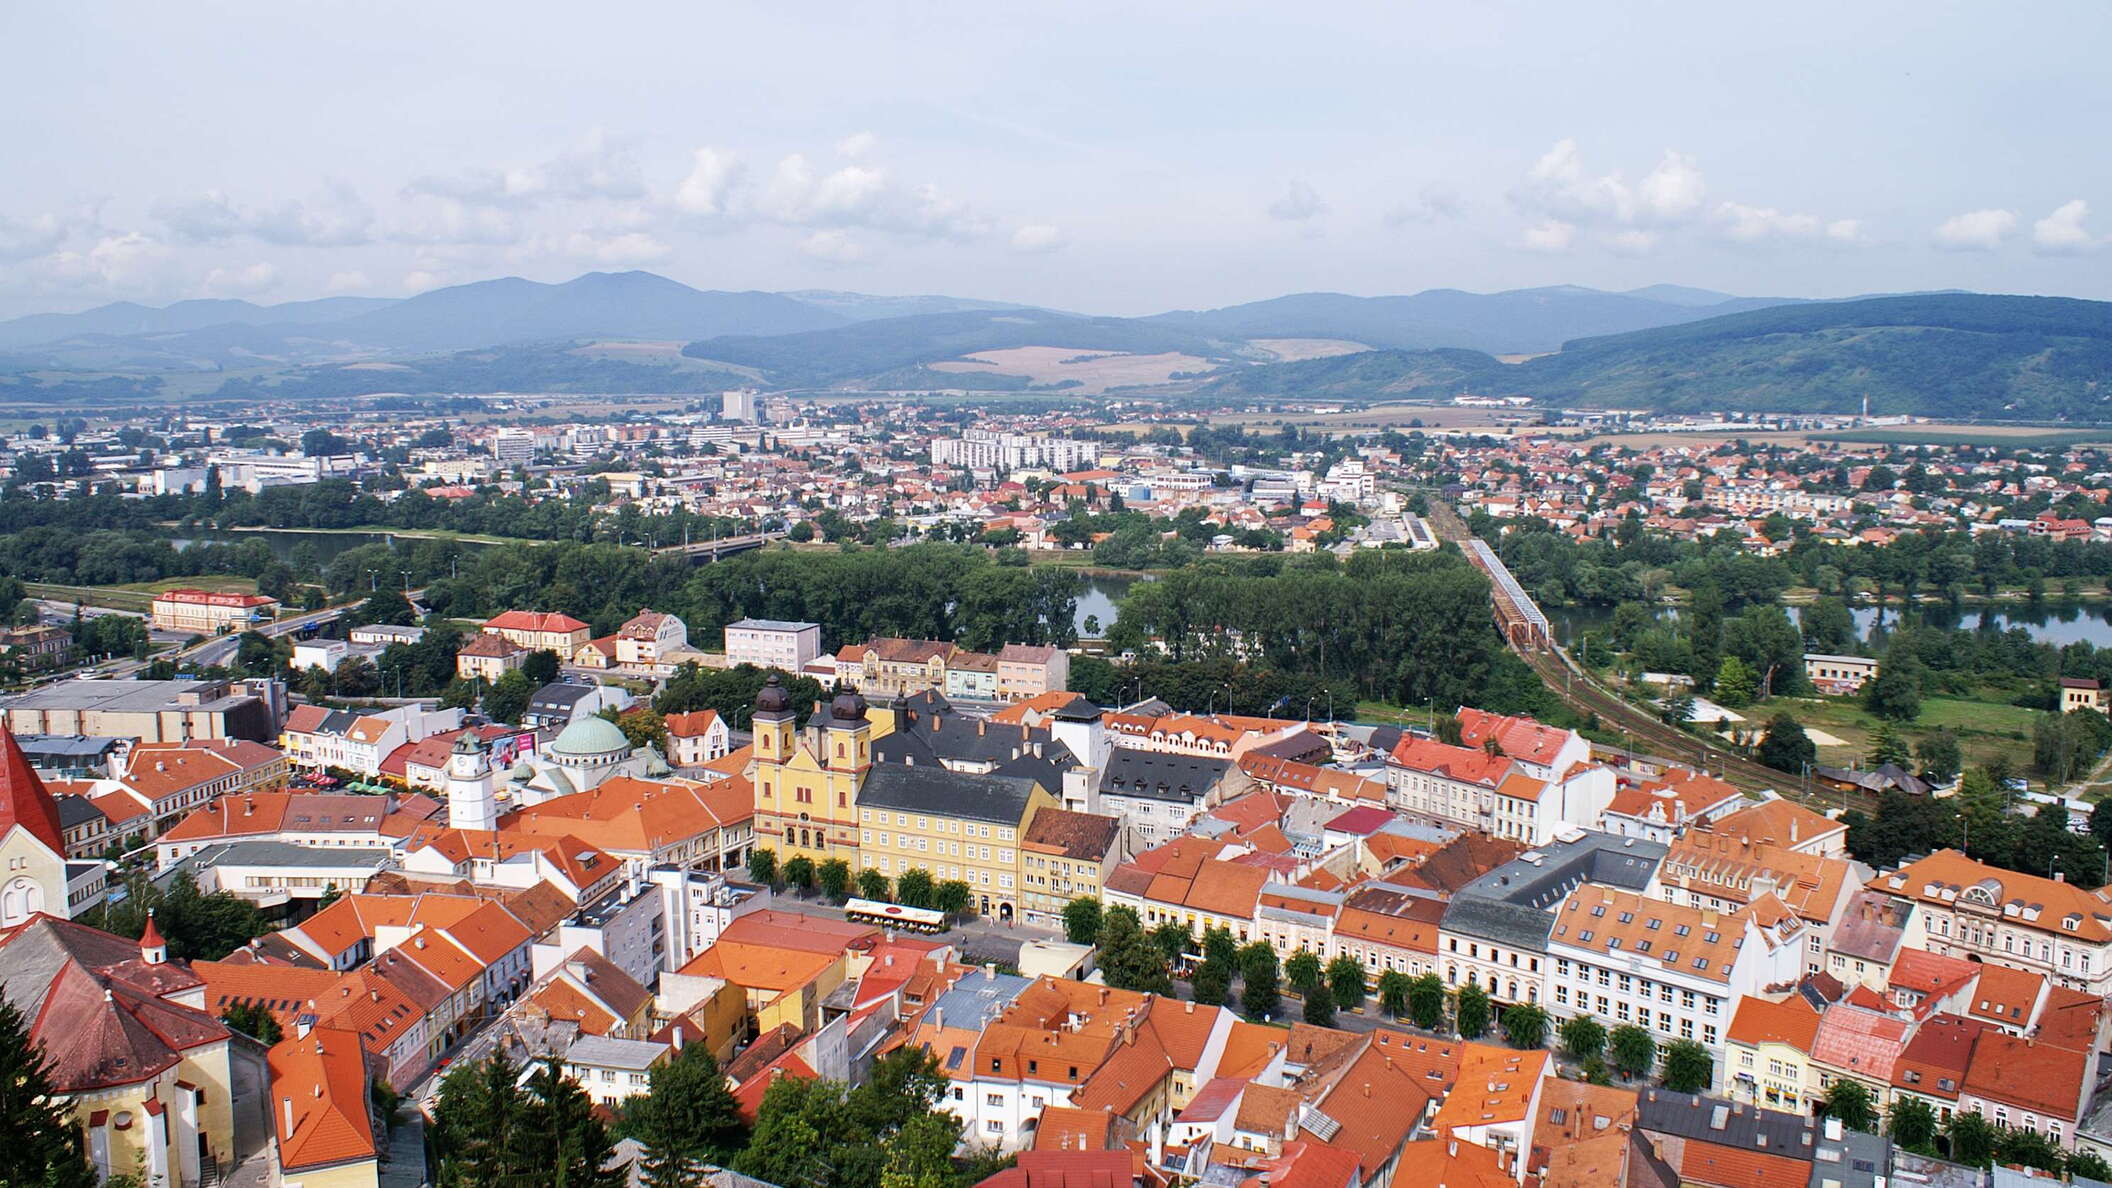 Váh Valley with Trenčín